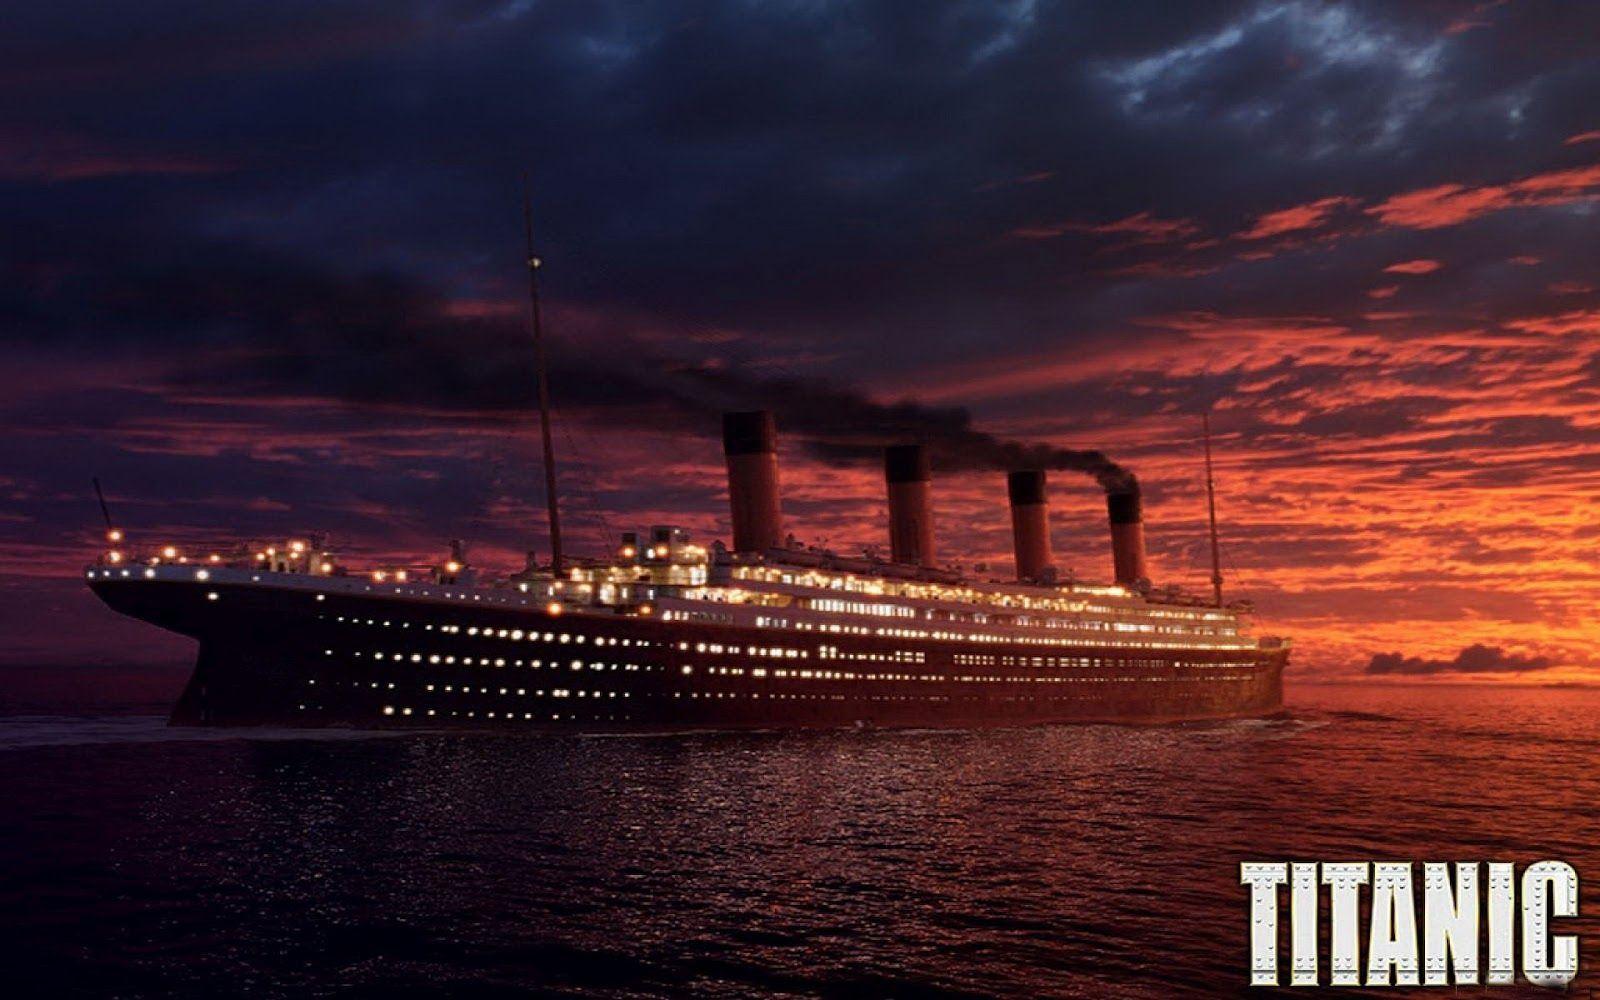 Titanic for windows download free